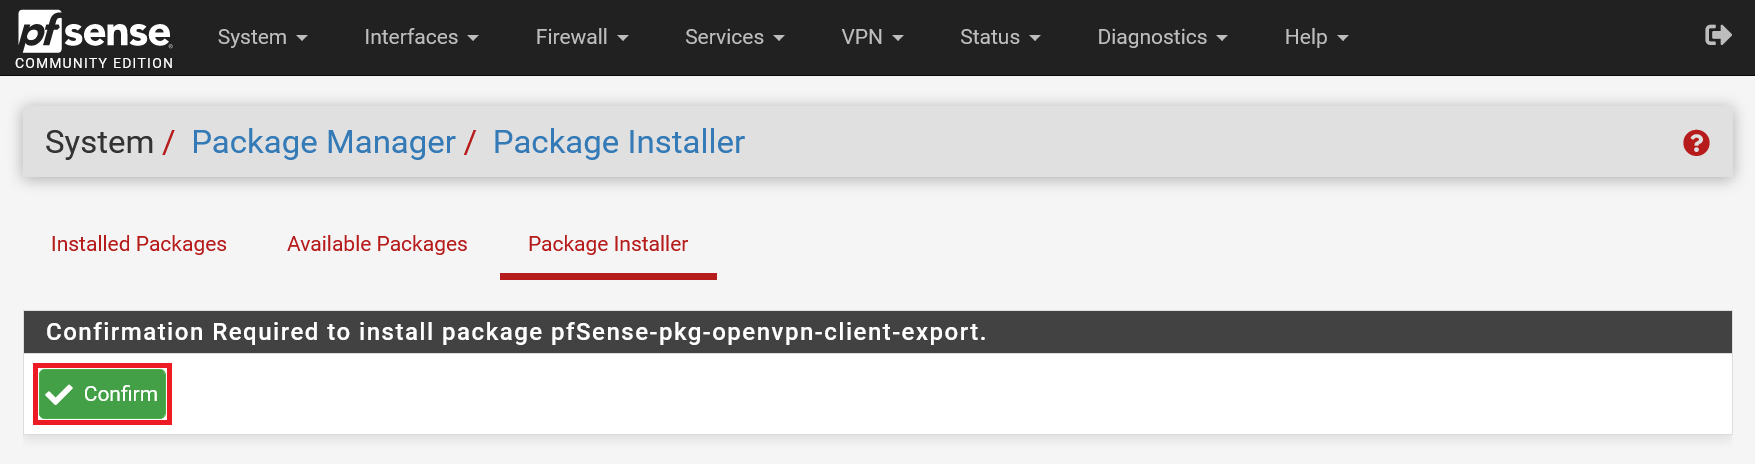 pfsense openvpn export confirm installation